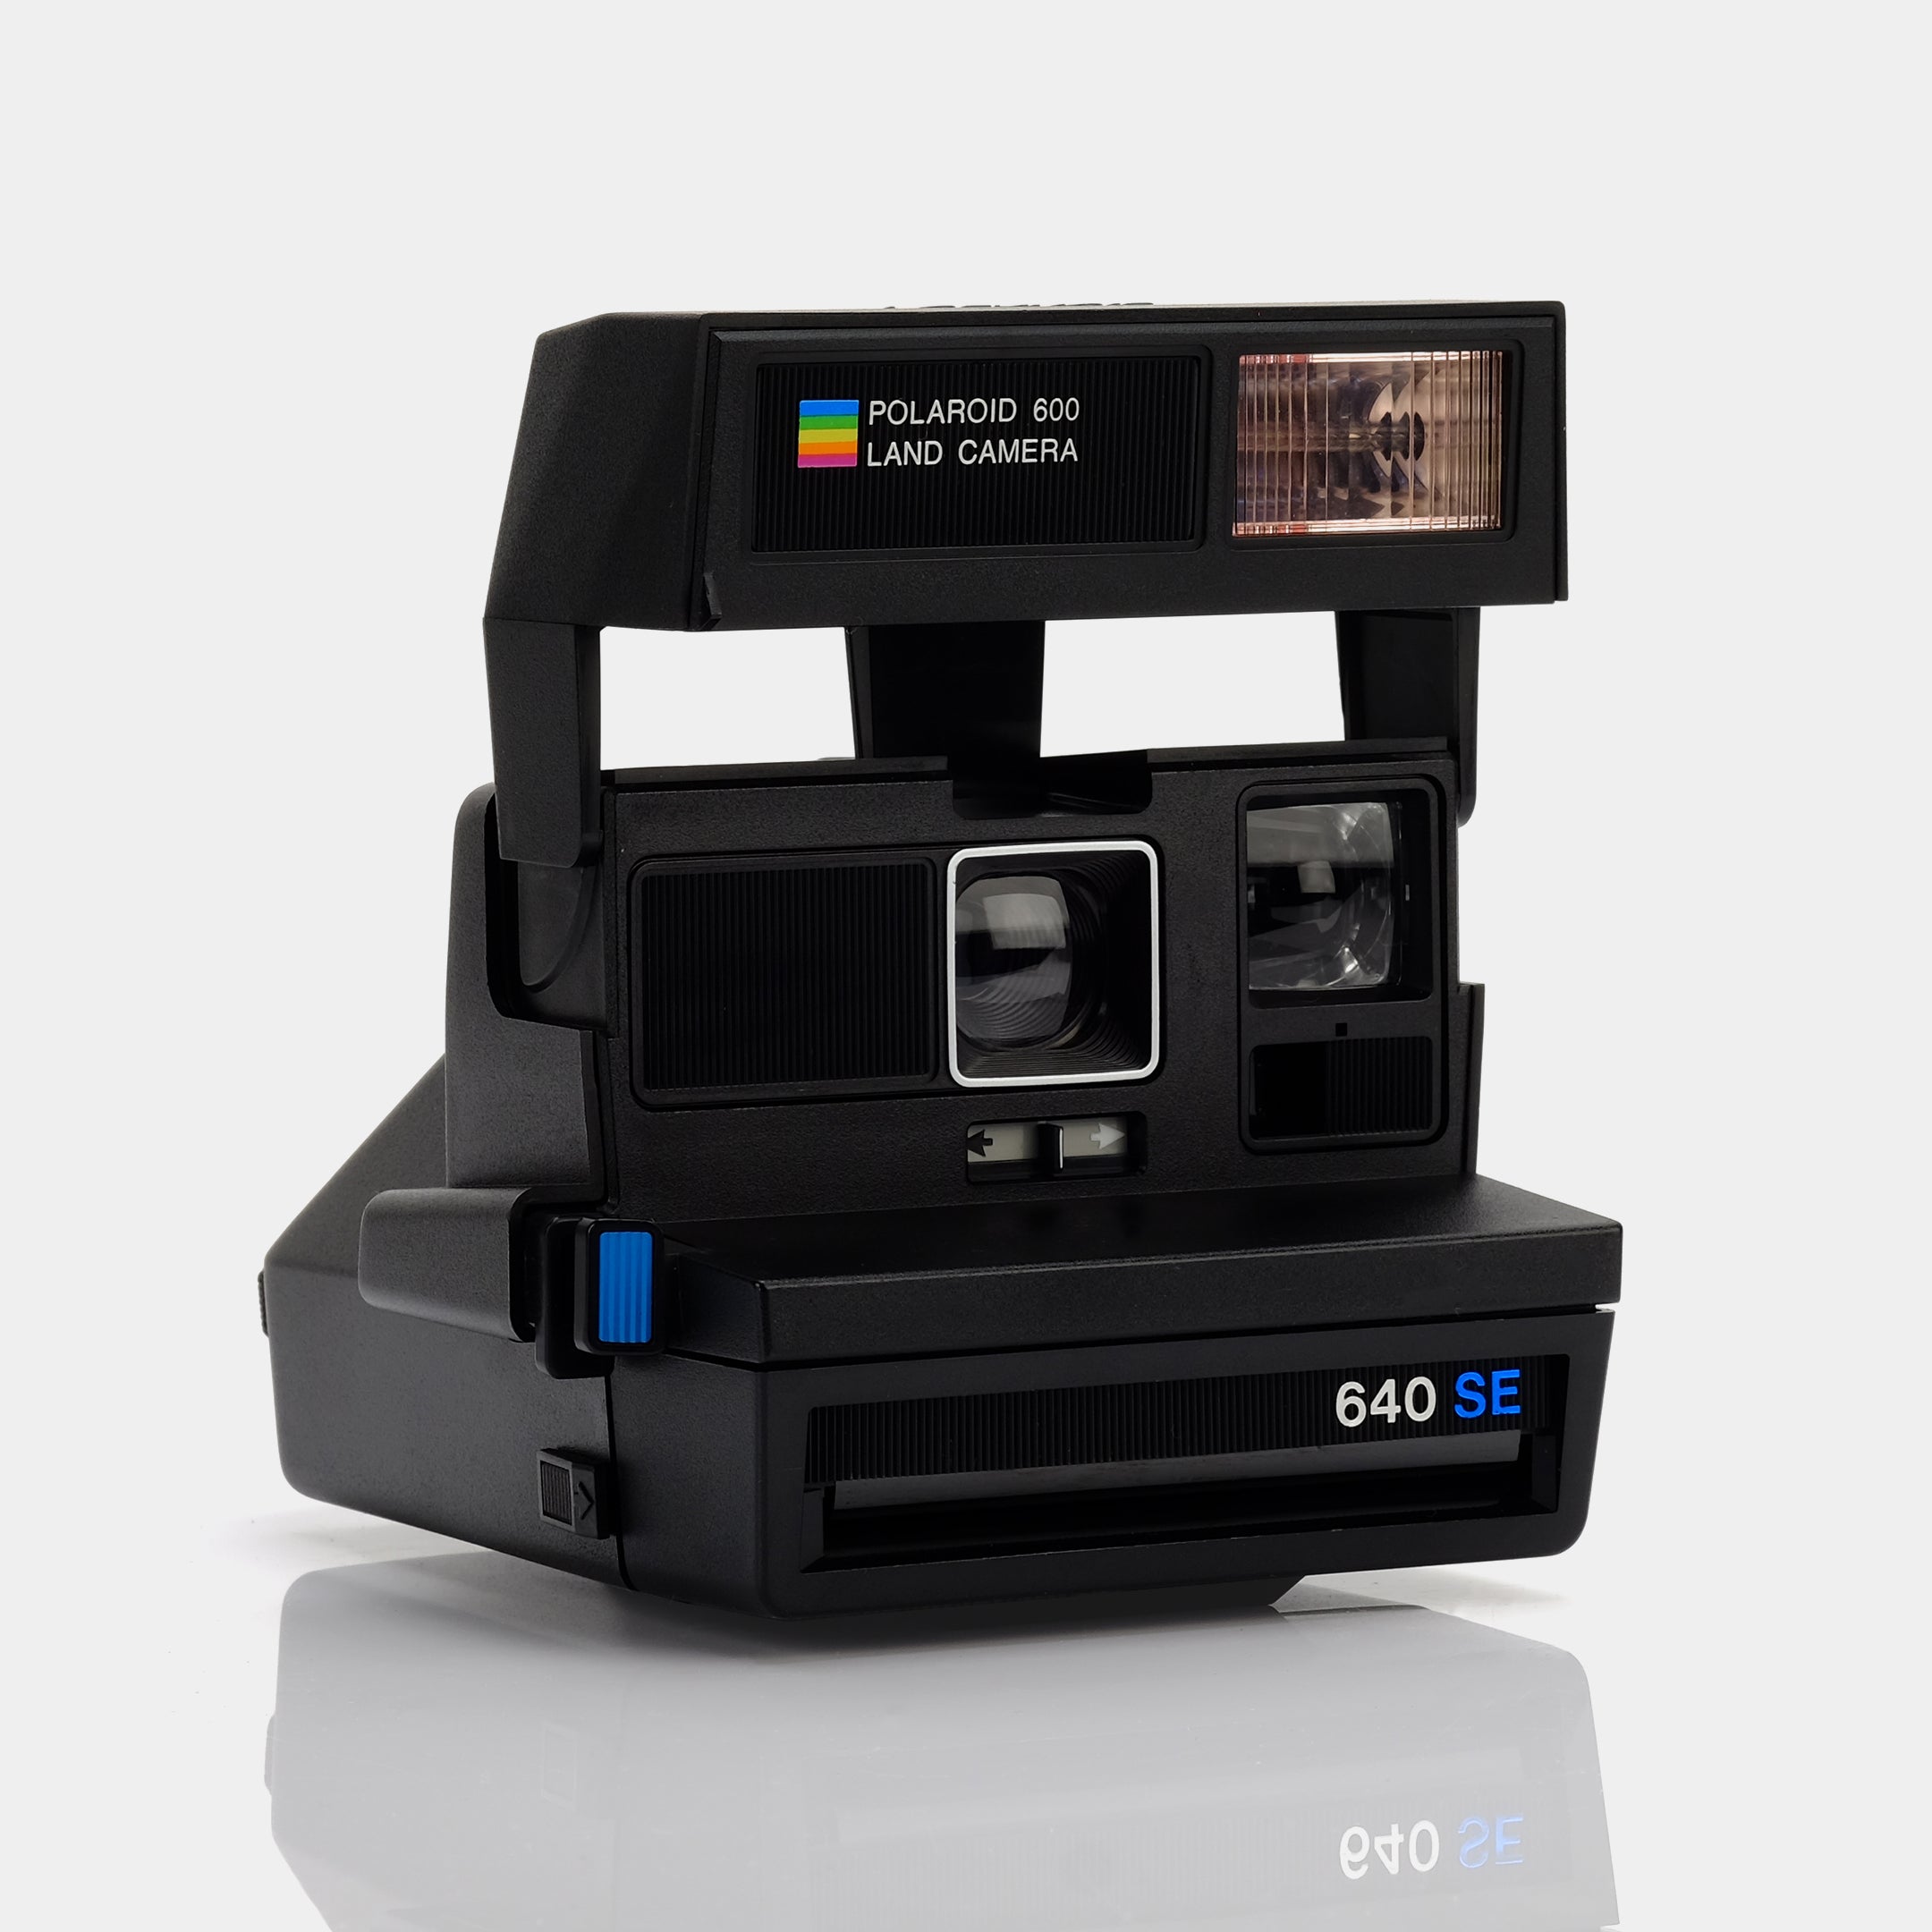 Polaroid 600 Model 640 SE Instant Film Camera